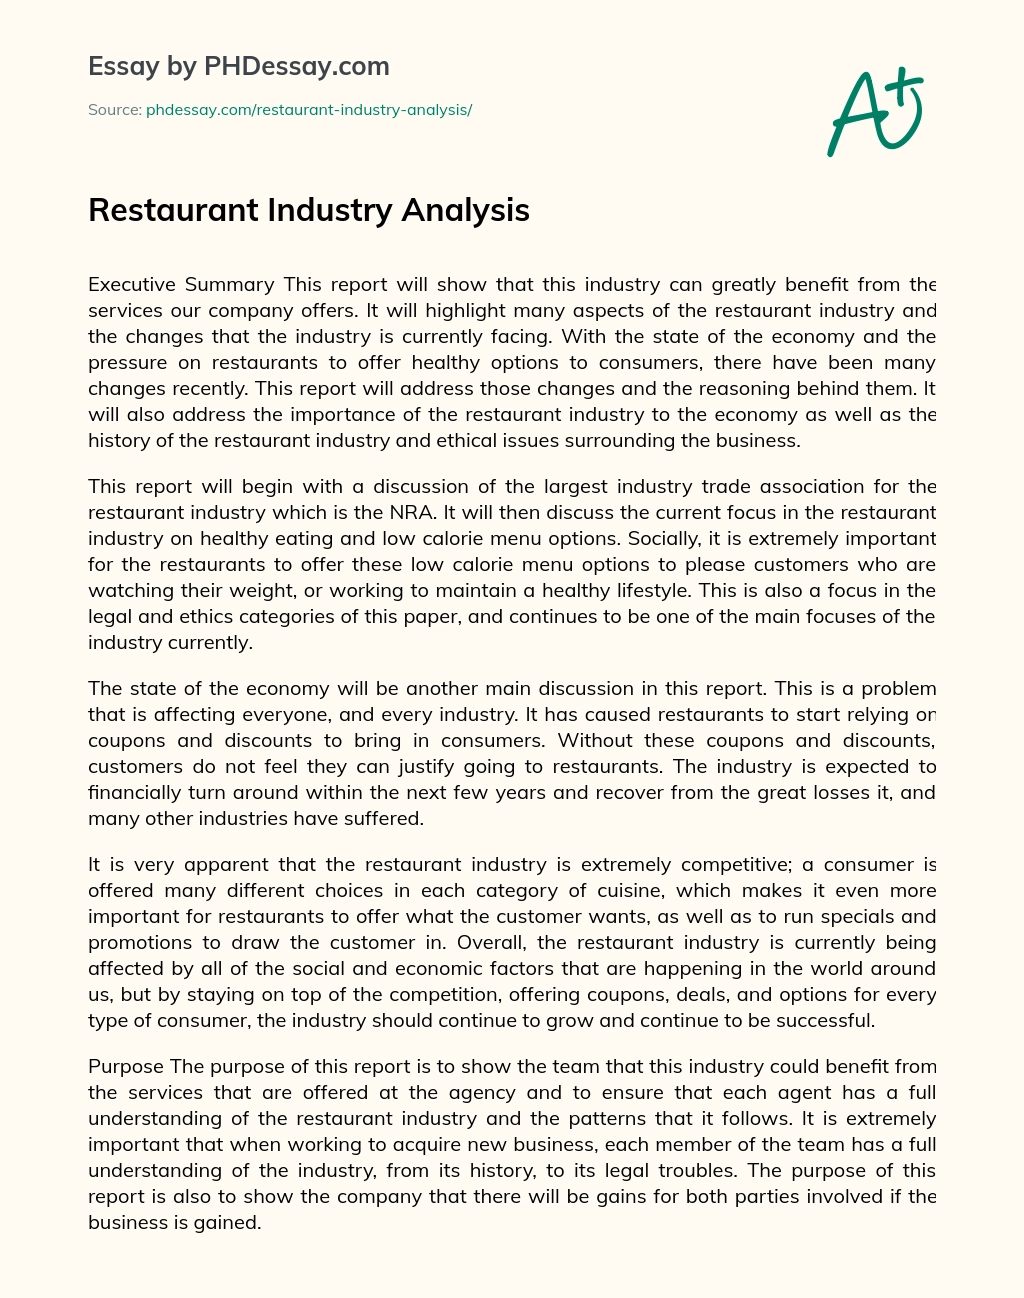 Реферат: Restaurant Business Essay Research Paper The restaurant